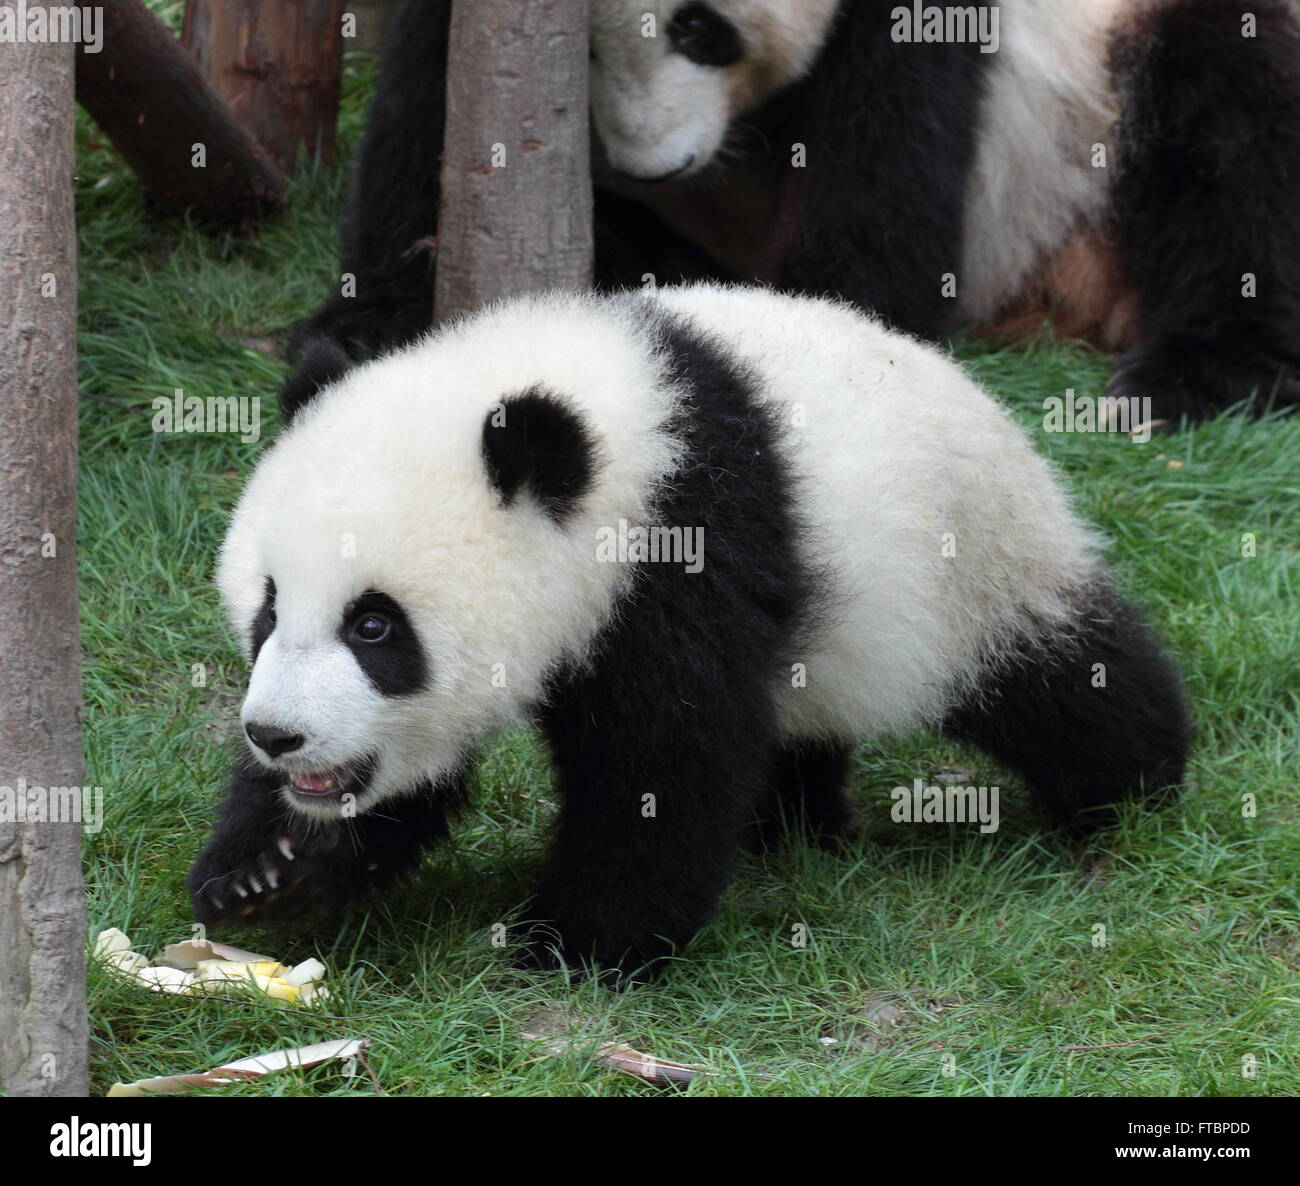 Giant panda bear on the walk Stock Photo